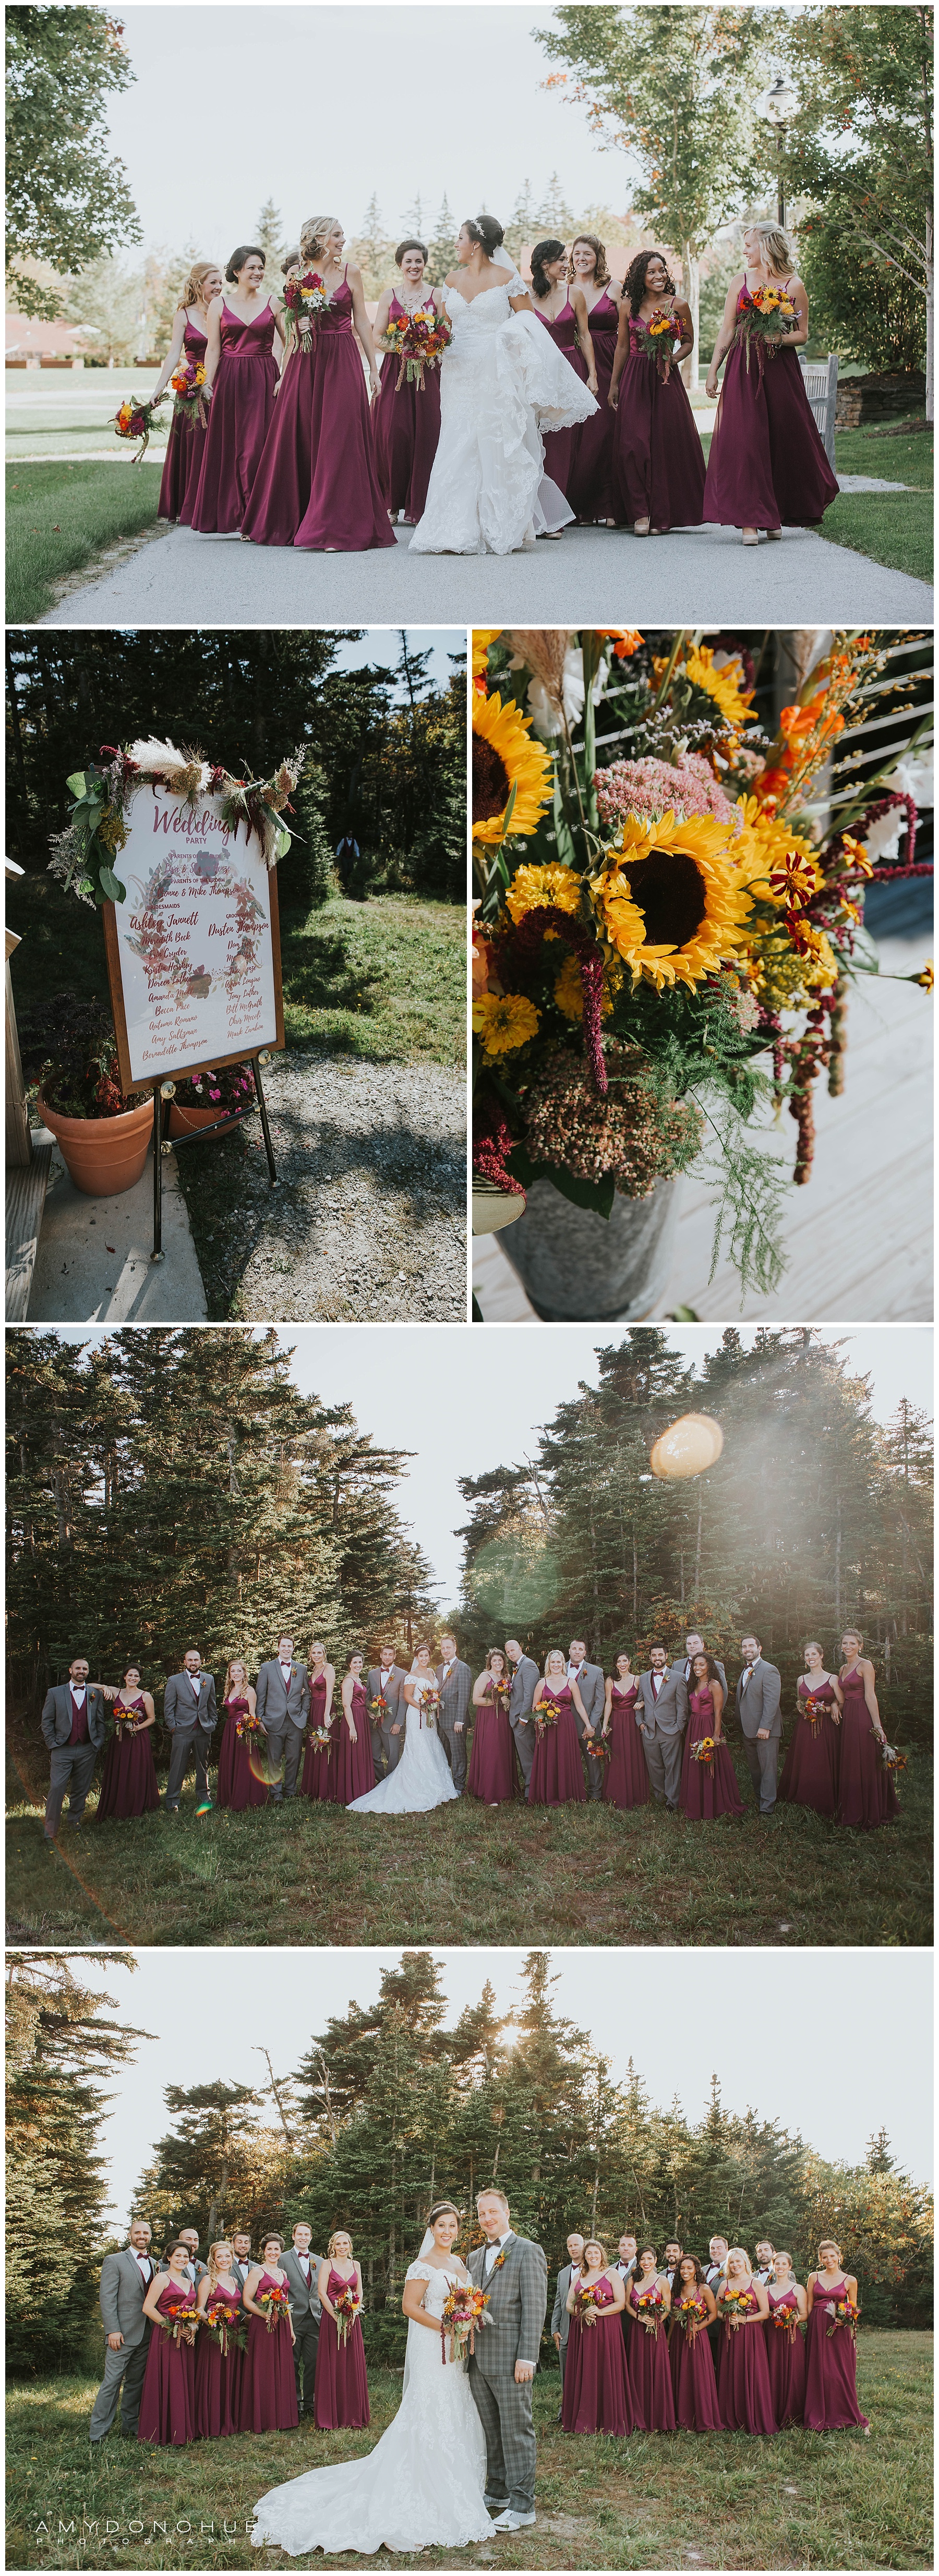 Stratton Mountain Resort Wedding | Vermont Wedding Photographer © Amy Donohue Photography